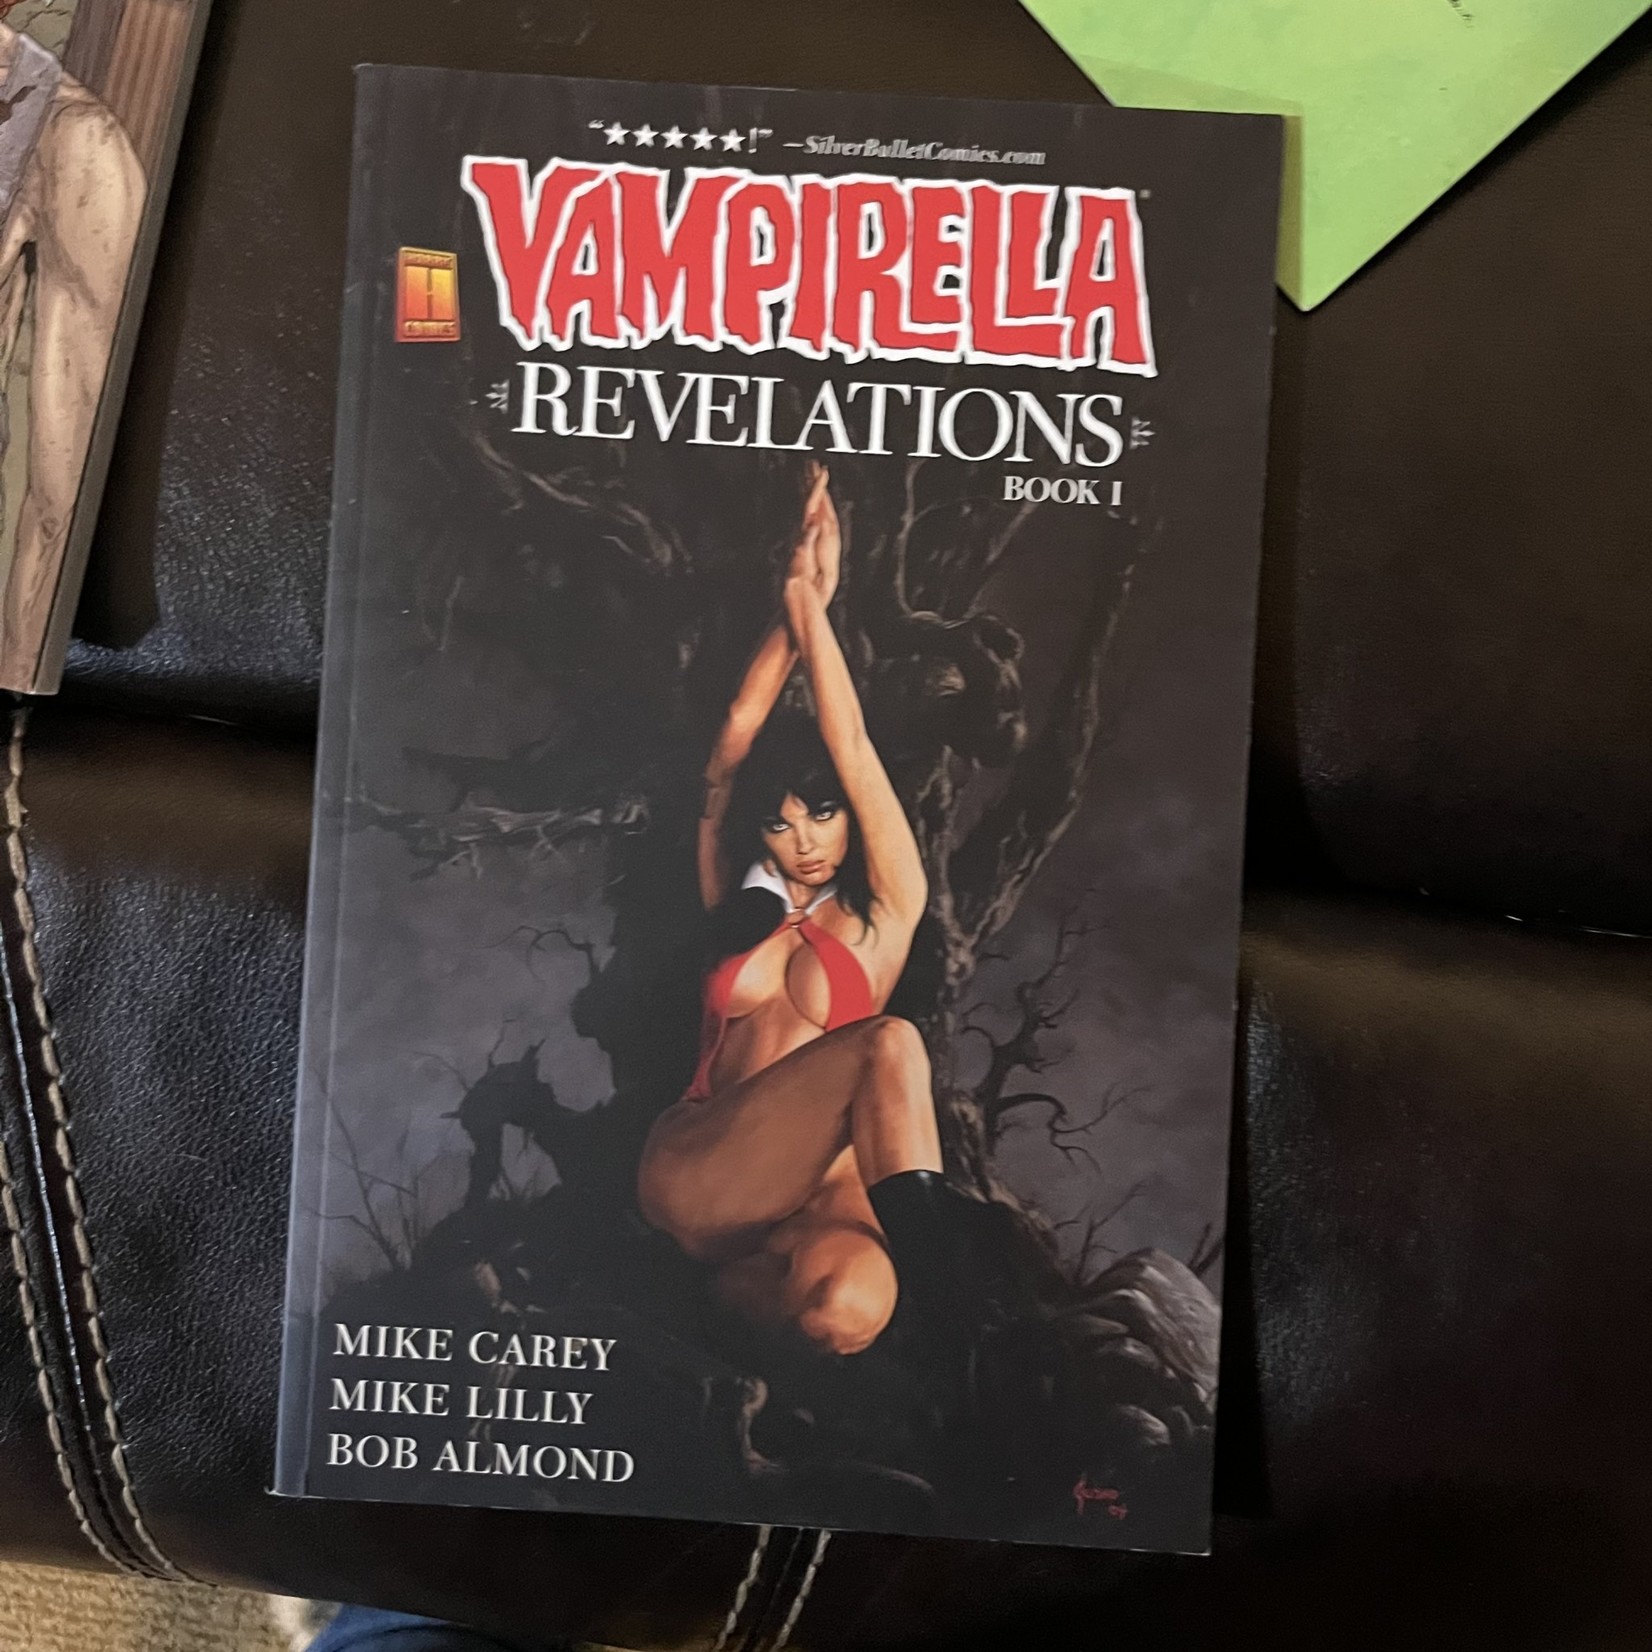 Vampirella Revelations - Book 1